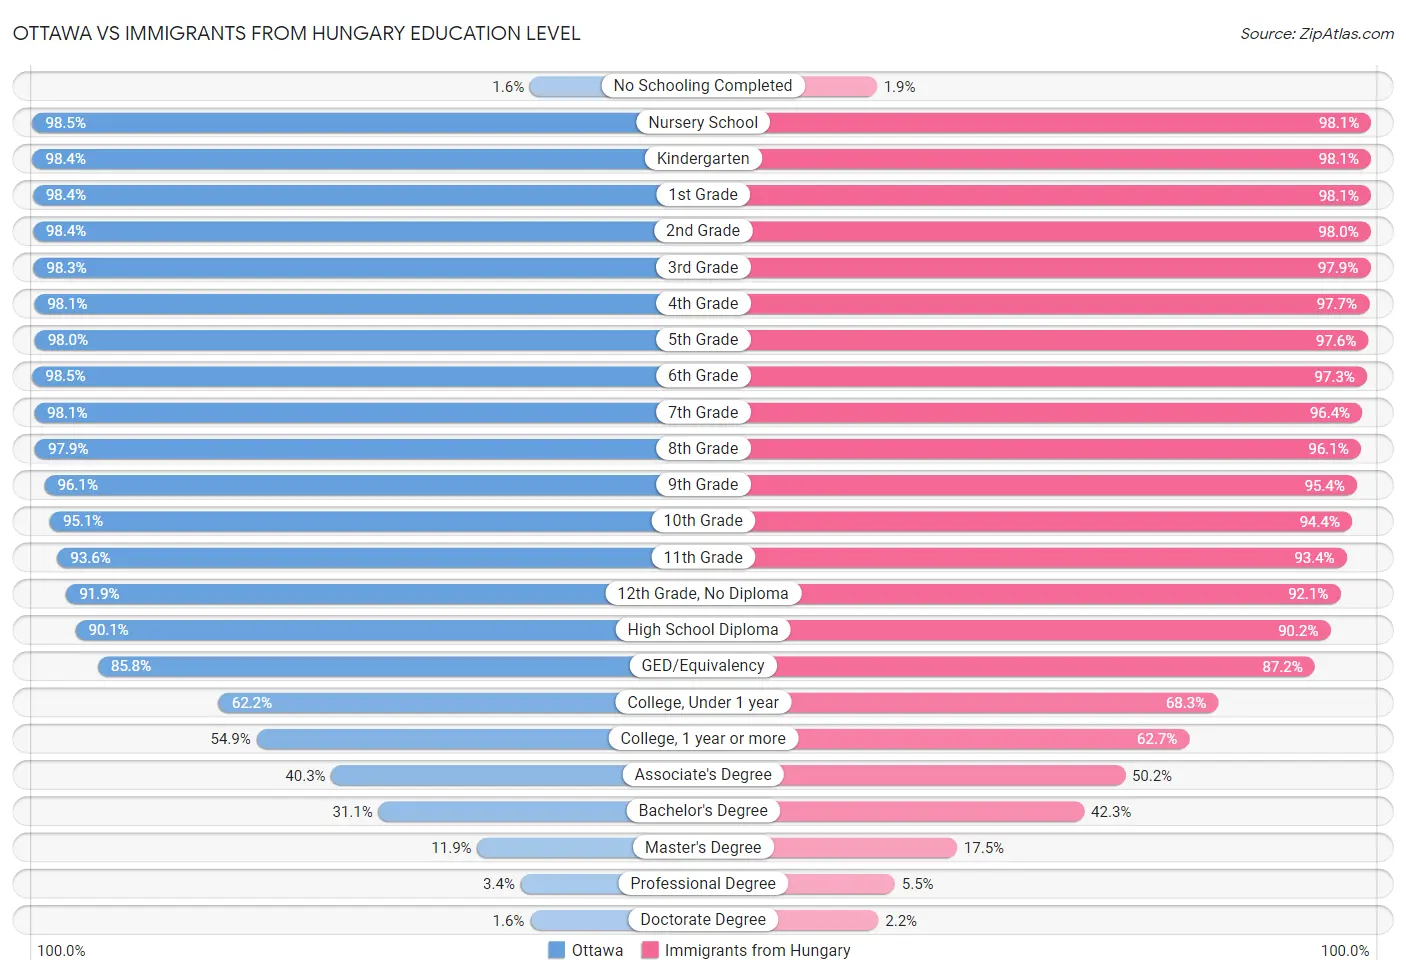 Ottawa vs Immigrants from Hungary Education Level